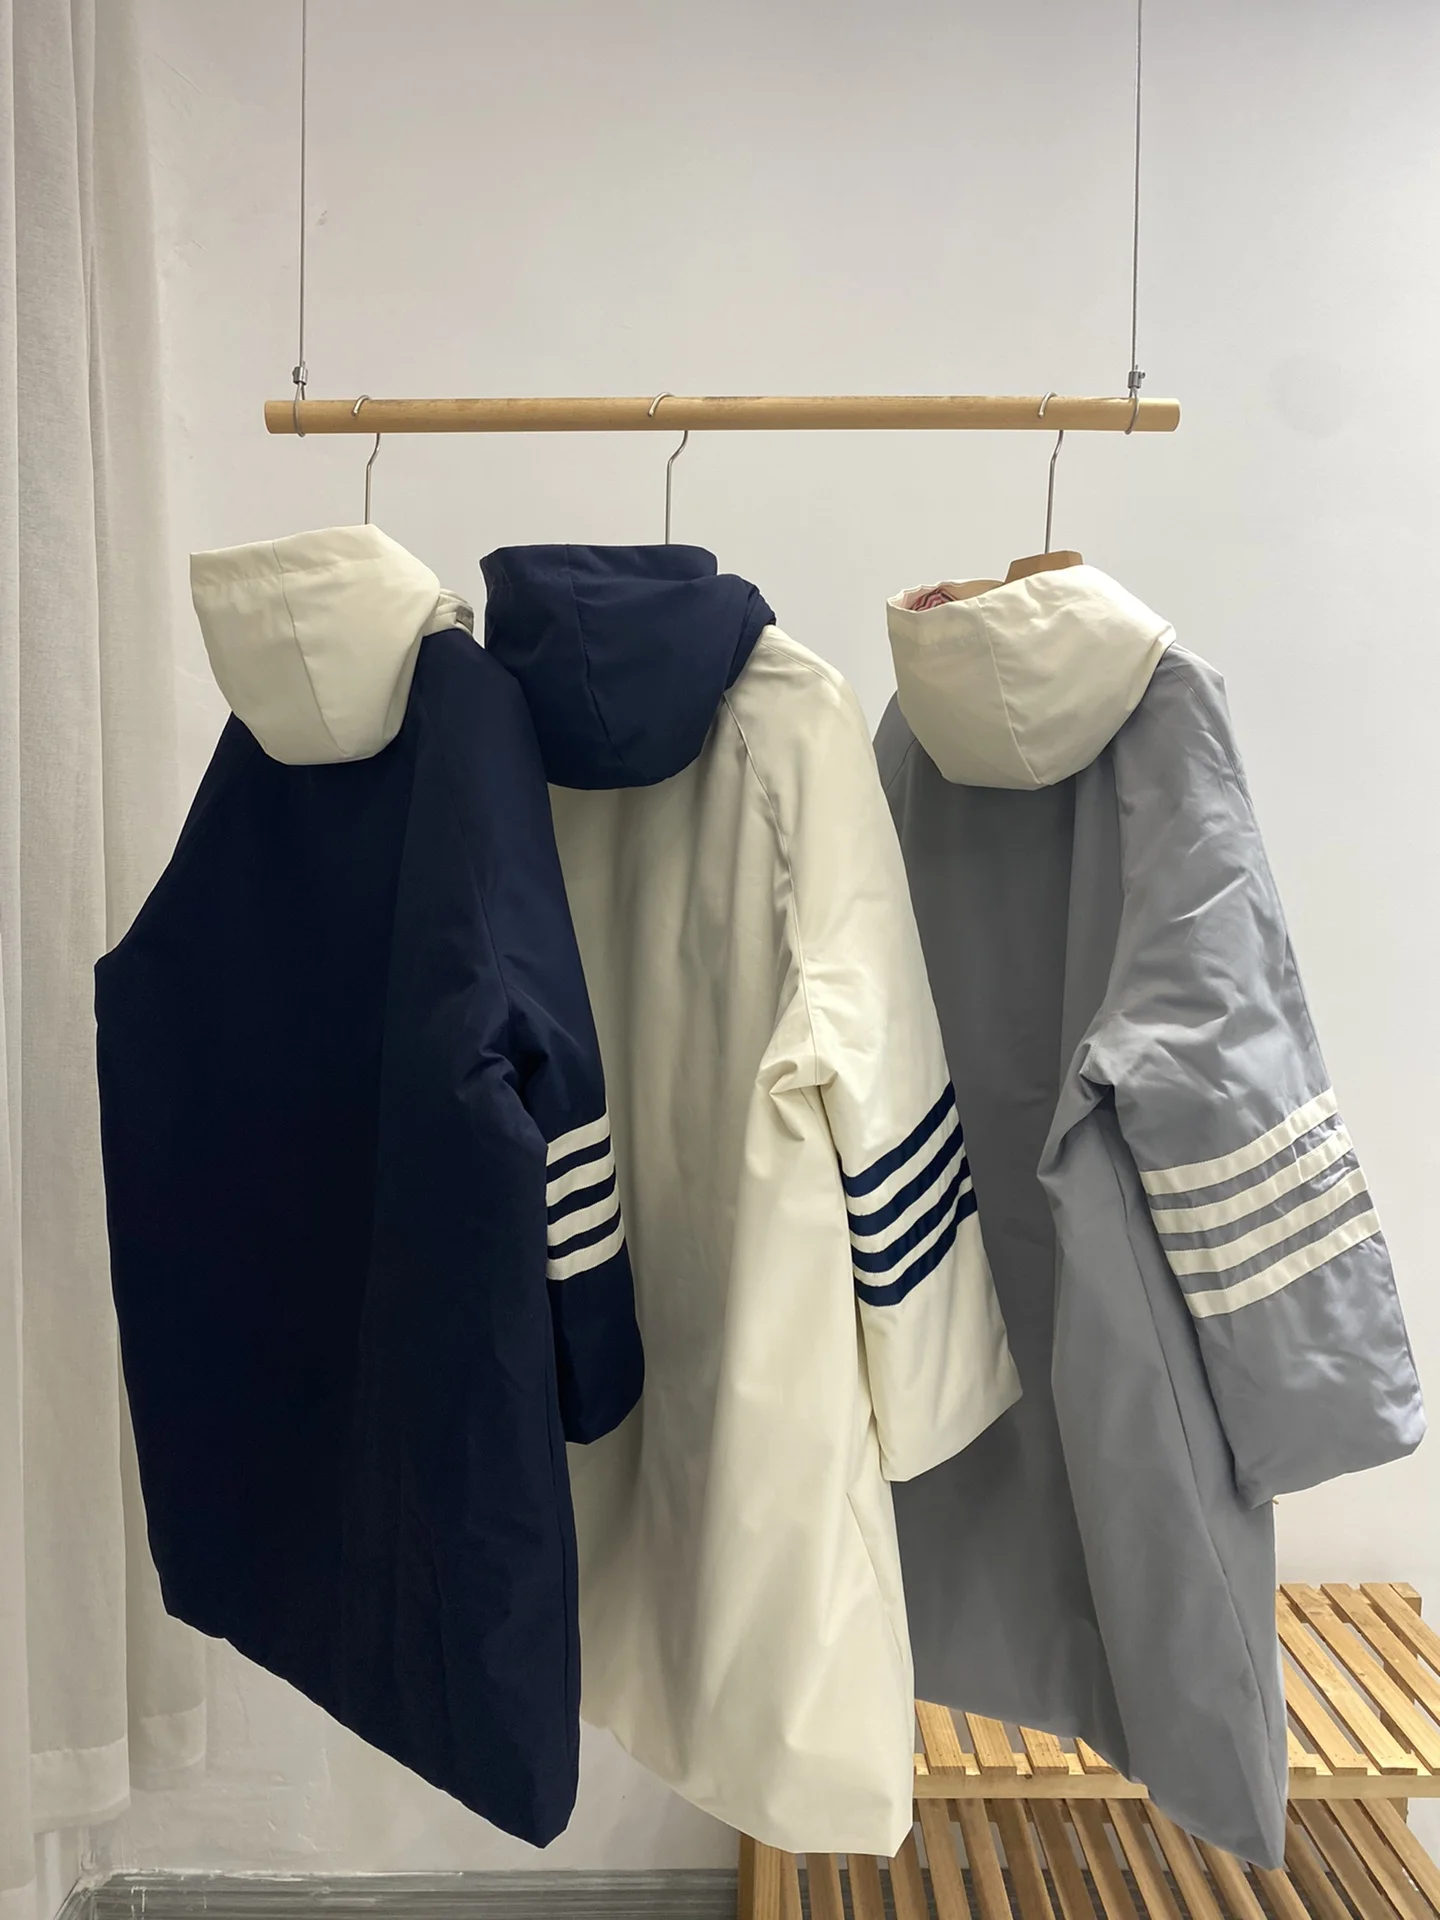 TB THOM Women's Jackets Winter Korean Fashion Brand Down Jackets Patchwork Stripes Hoodies Overcoats Thick Warm Hatajuku Coats enlarge